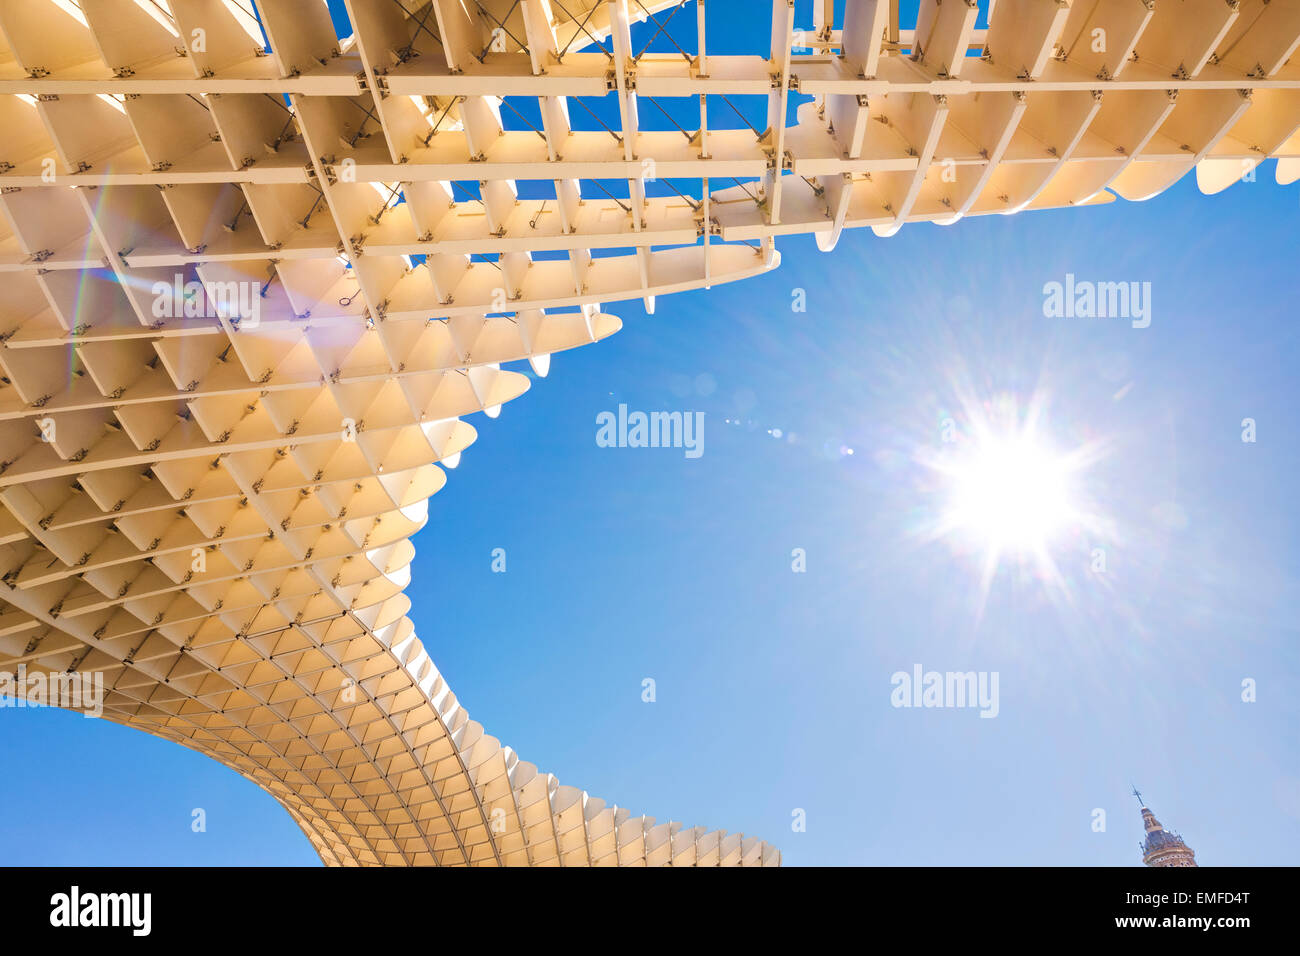 Las Setas De La Encarnacion oder moderne Holzstruktur Sevilla Metropol Parasol in Sevilla Spanien Stockfoto